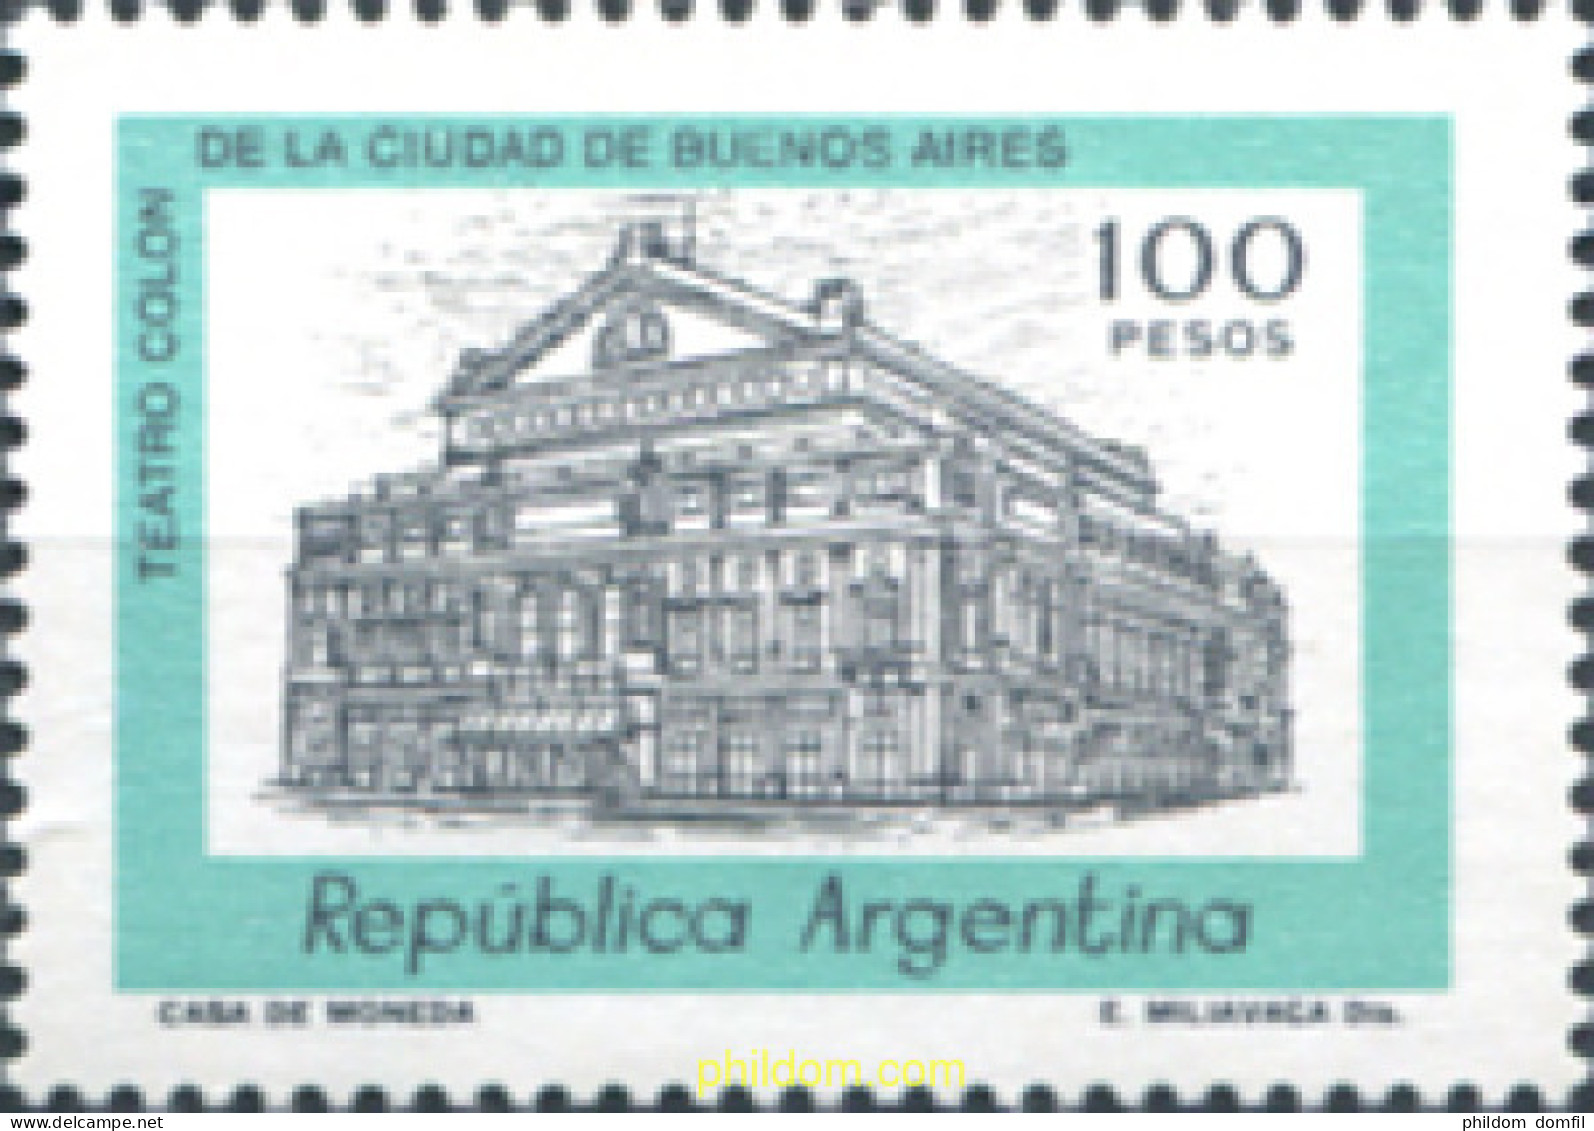 283461 MNH ARGENTINA 1981 SERIE BASICA - Nuovi